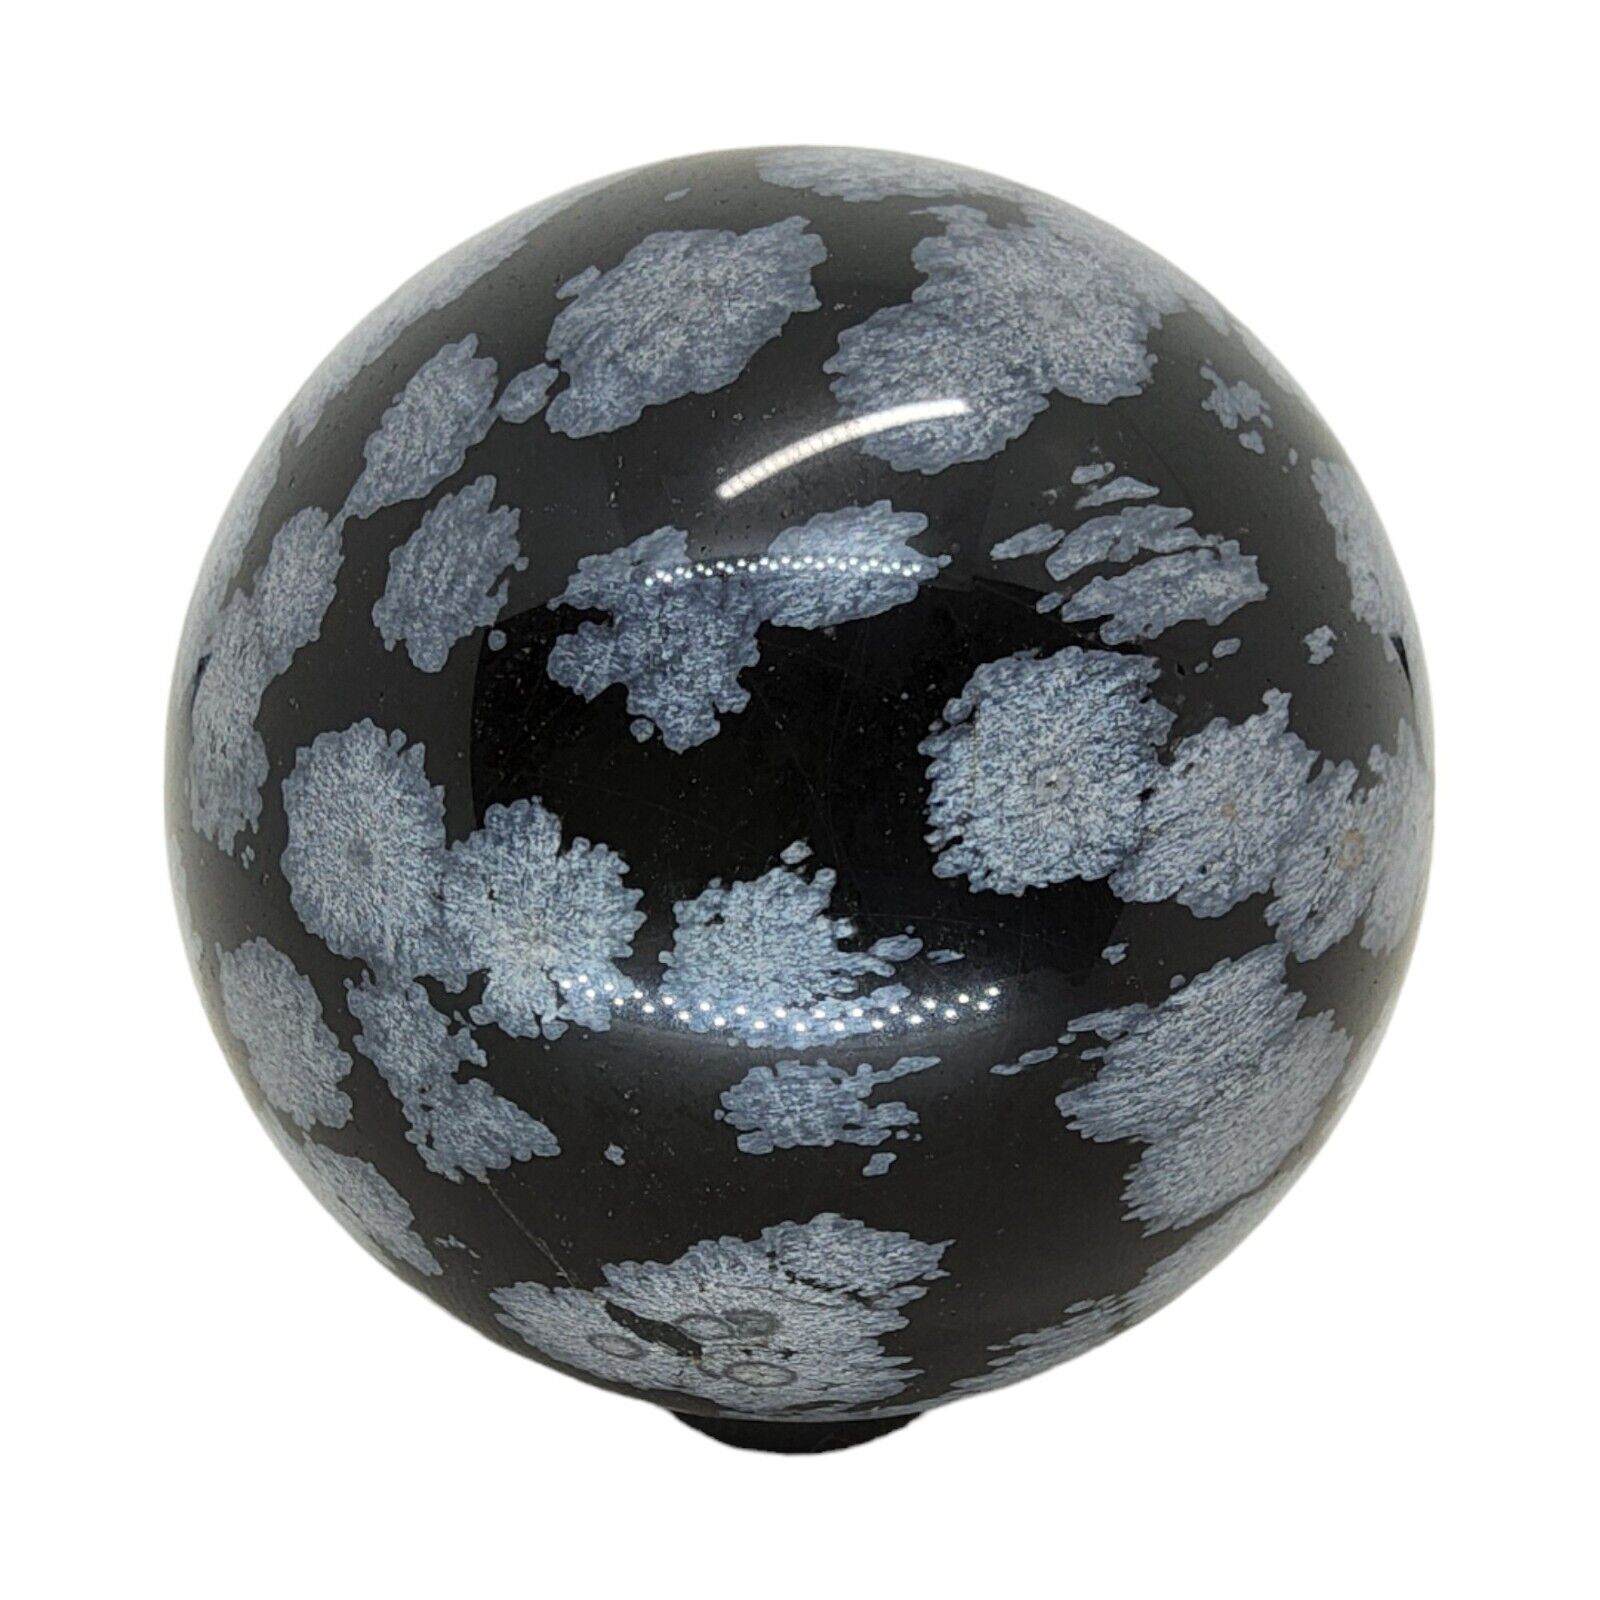 Snowflake Obsidian, 2 5/8 in, sphere, ball, specimen, display, gemstone, #R-6141